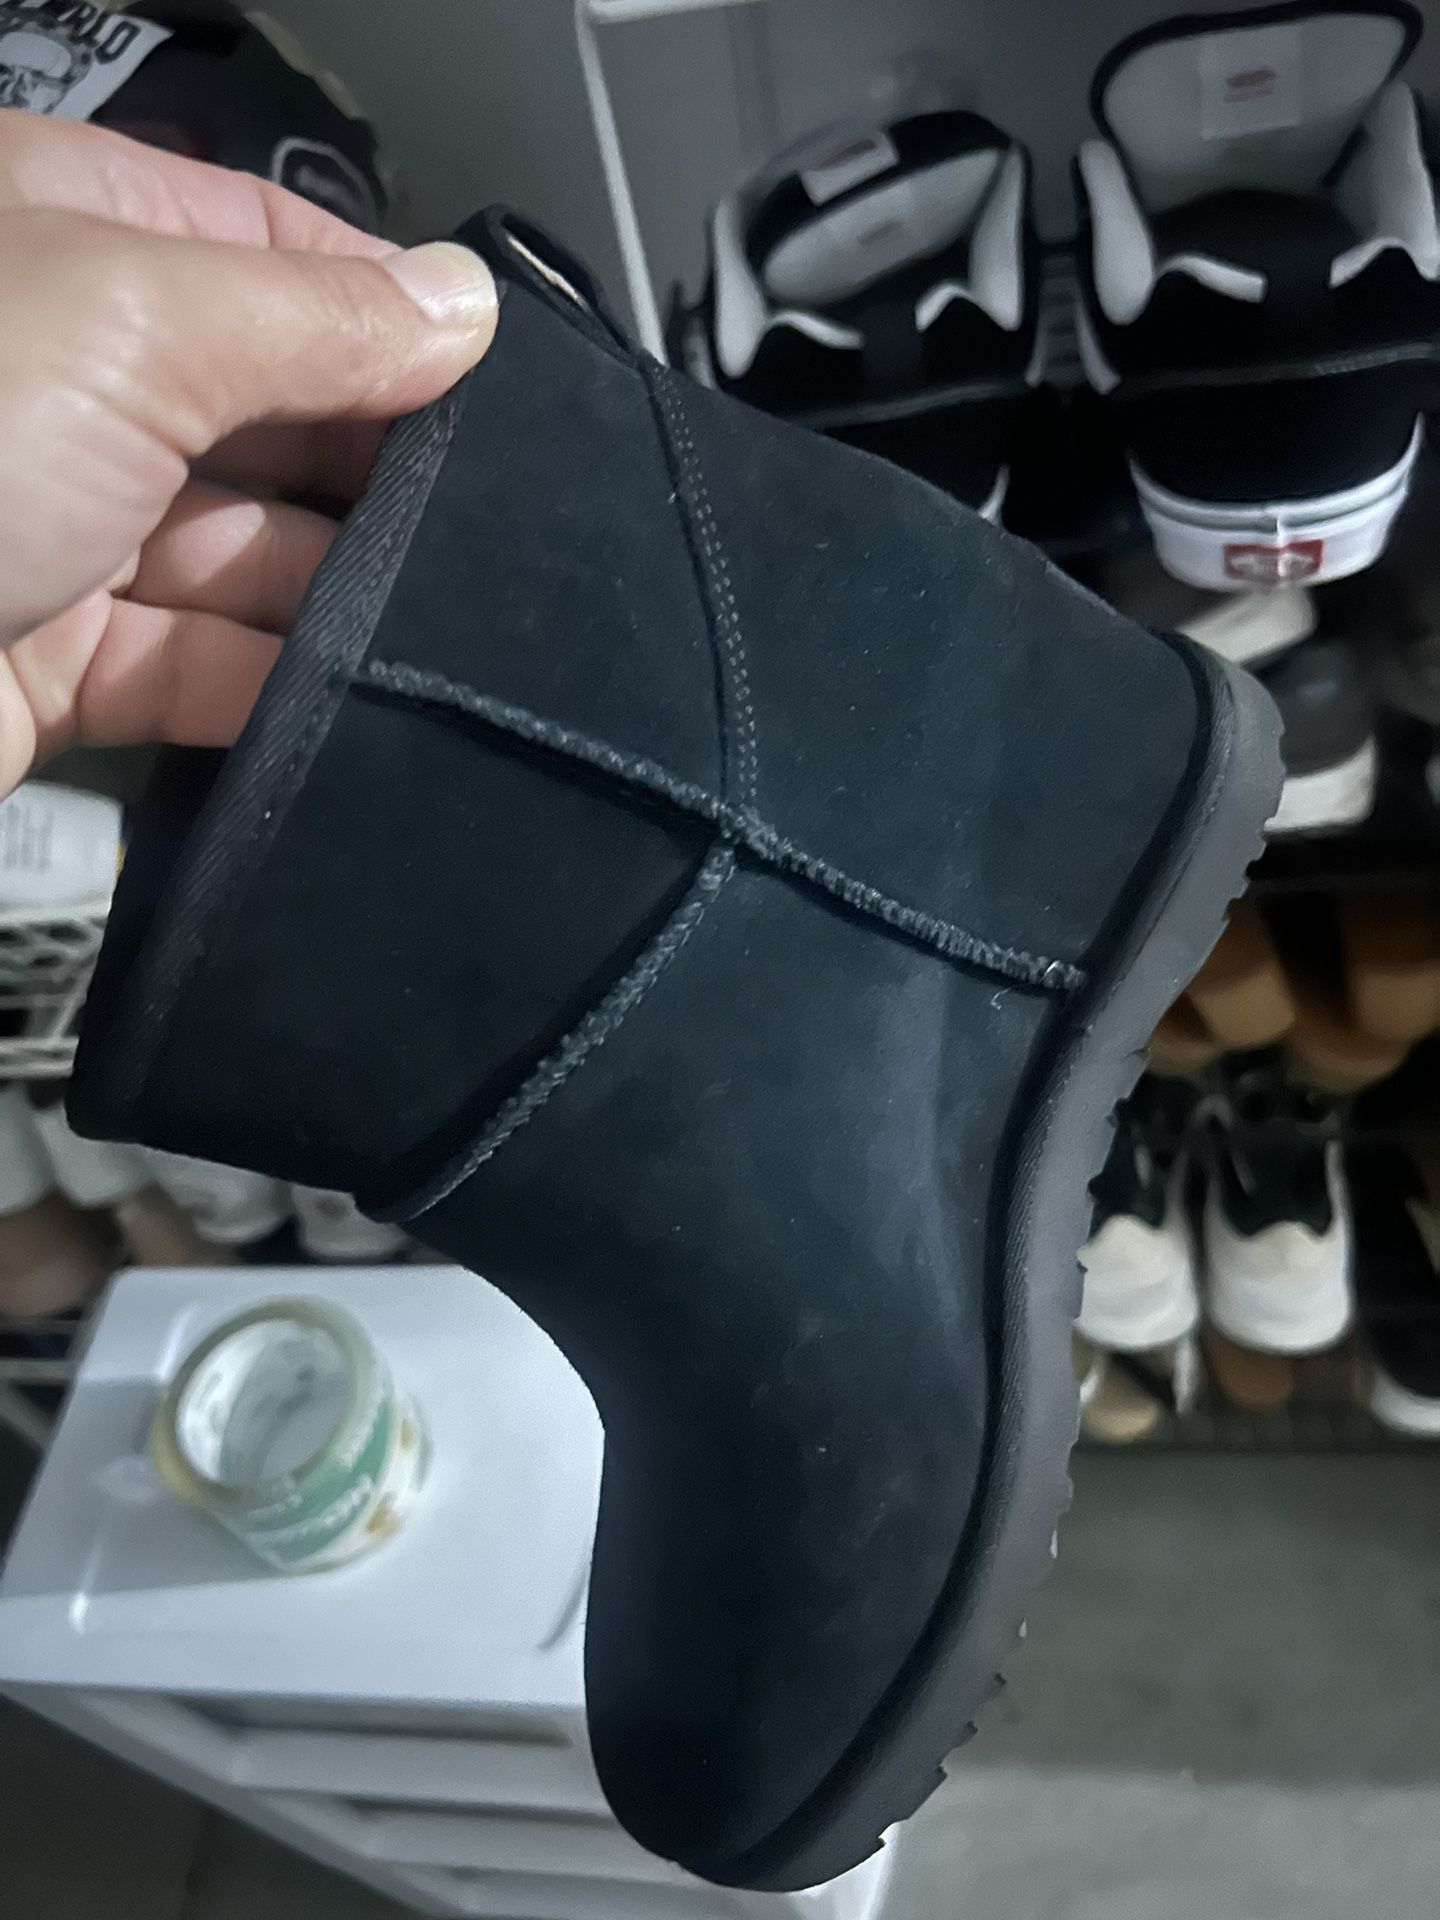 Original Ugg Wedge Boots Size 8